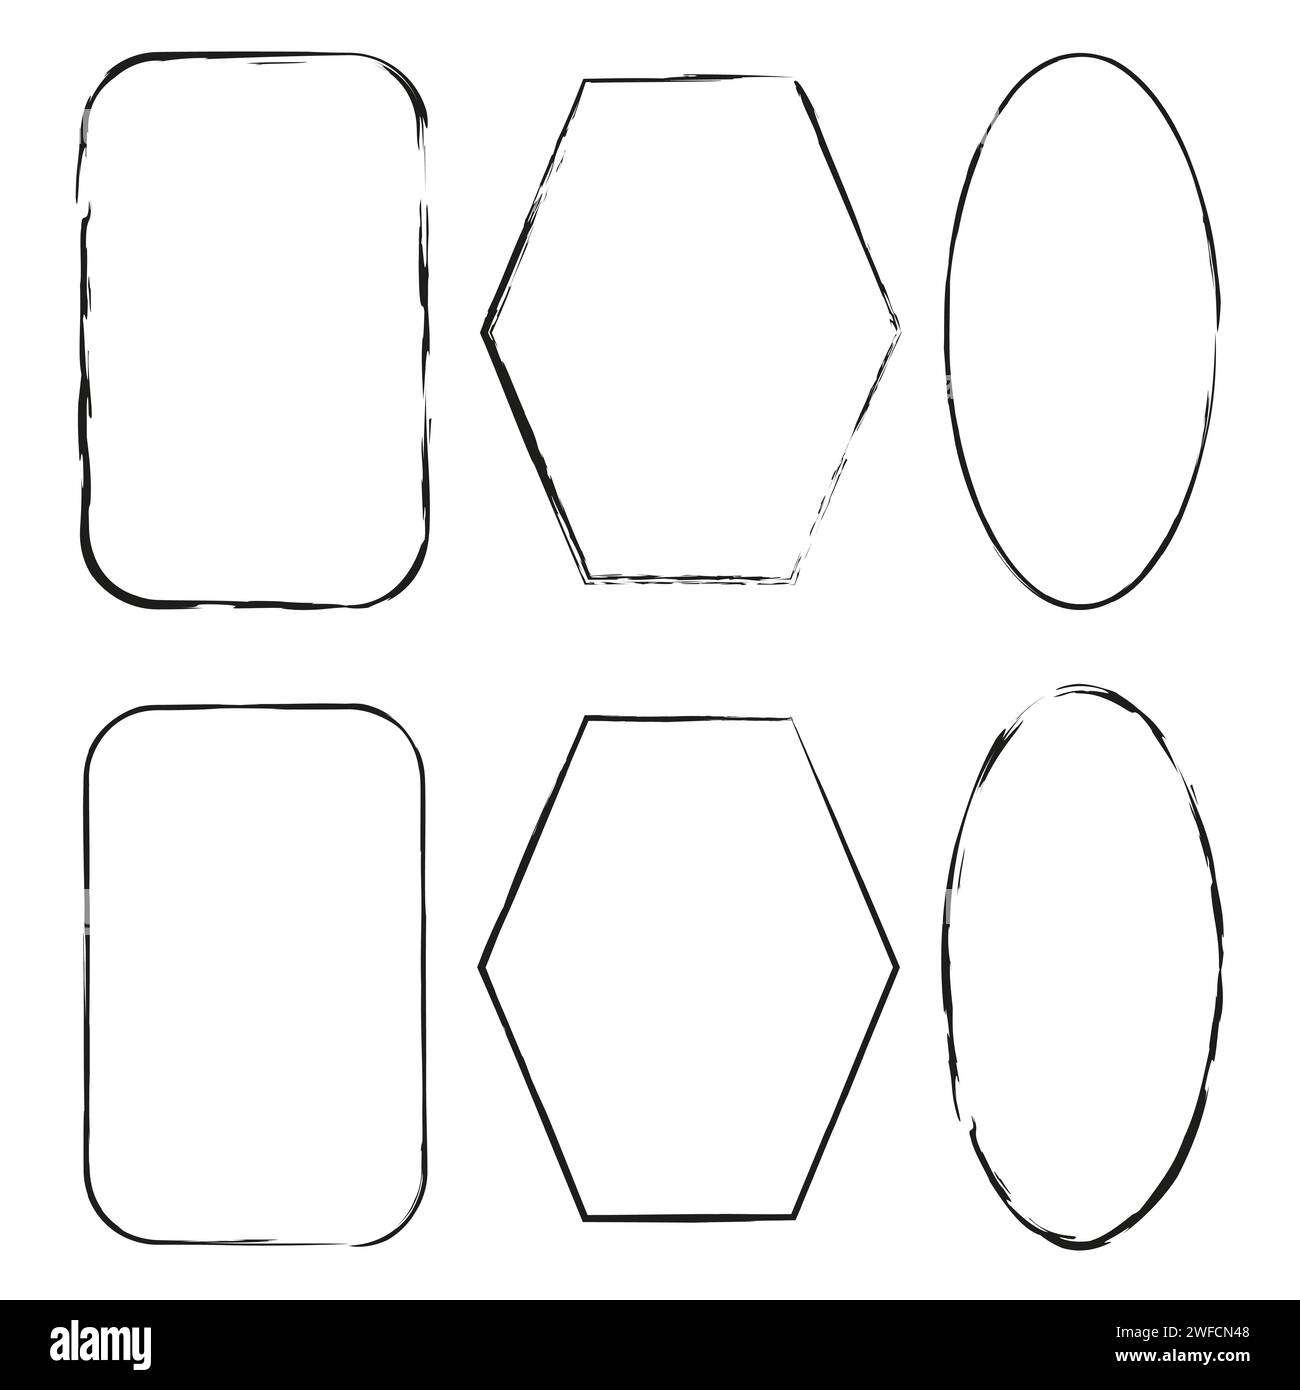 Exclusive frames, figures. Different grunge frame shapes. Design element. stock image. EPS 10. Stock Vector